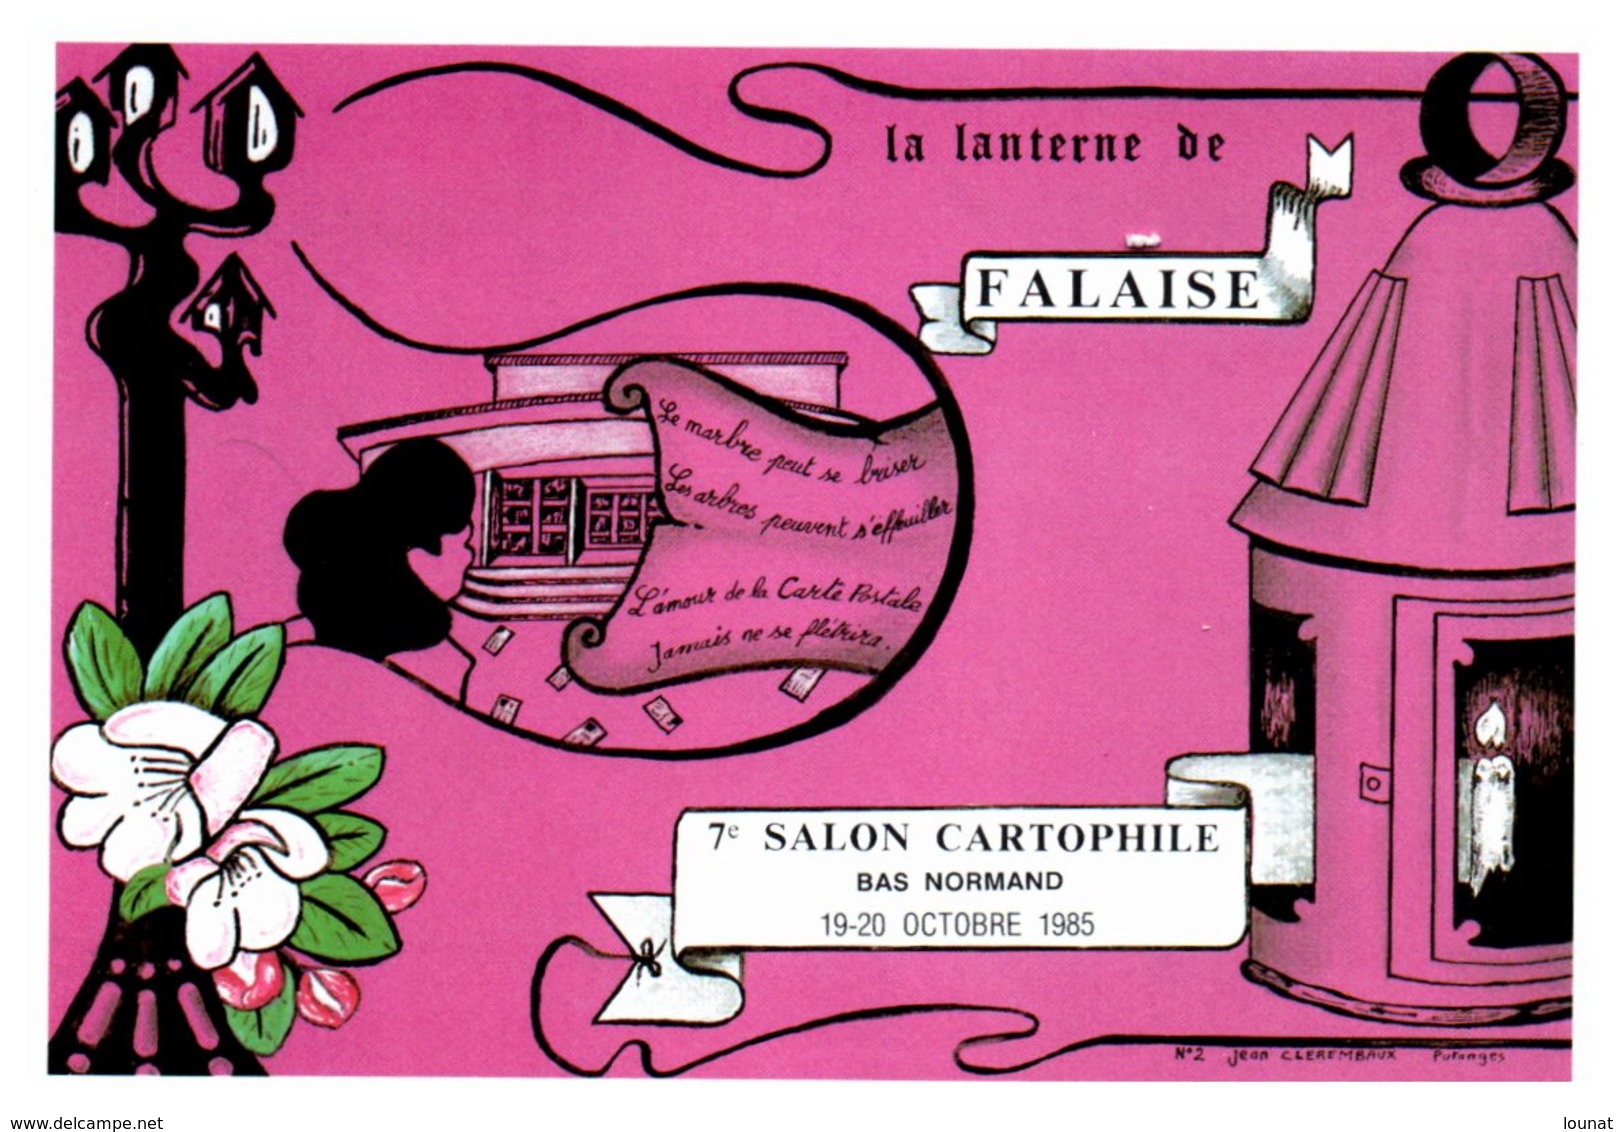 Bourse Et Salon De Collection - FALAISE - La Lanterne De Falaise - 7 ème Salon Cartophile  - Année 1985 - Sammlerbörsen & Sammlerausstellungen